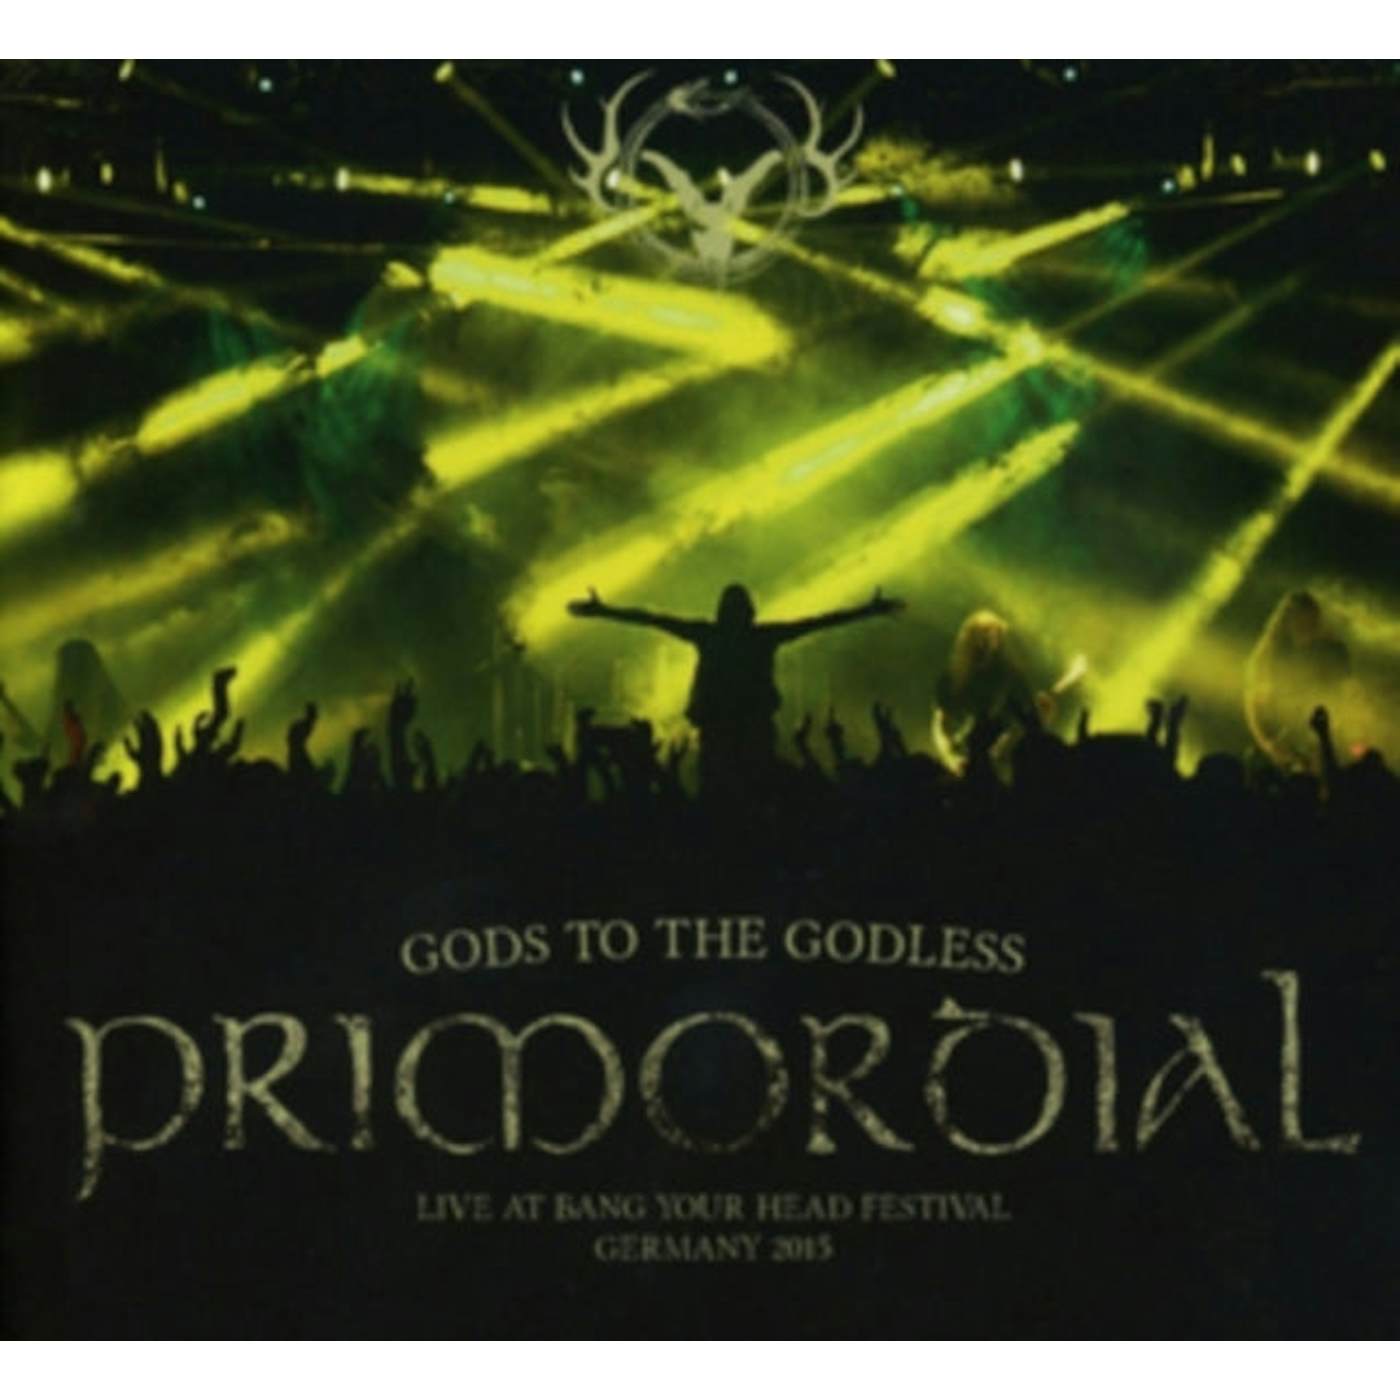 Primordial LP Vinyl Record - Gods To The Godless